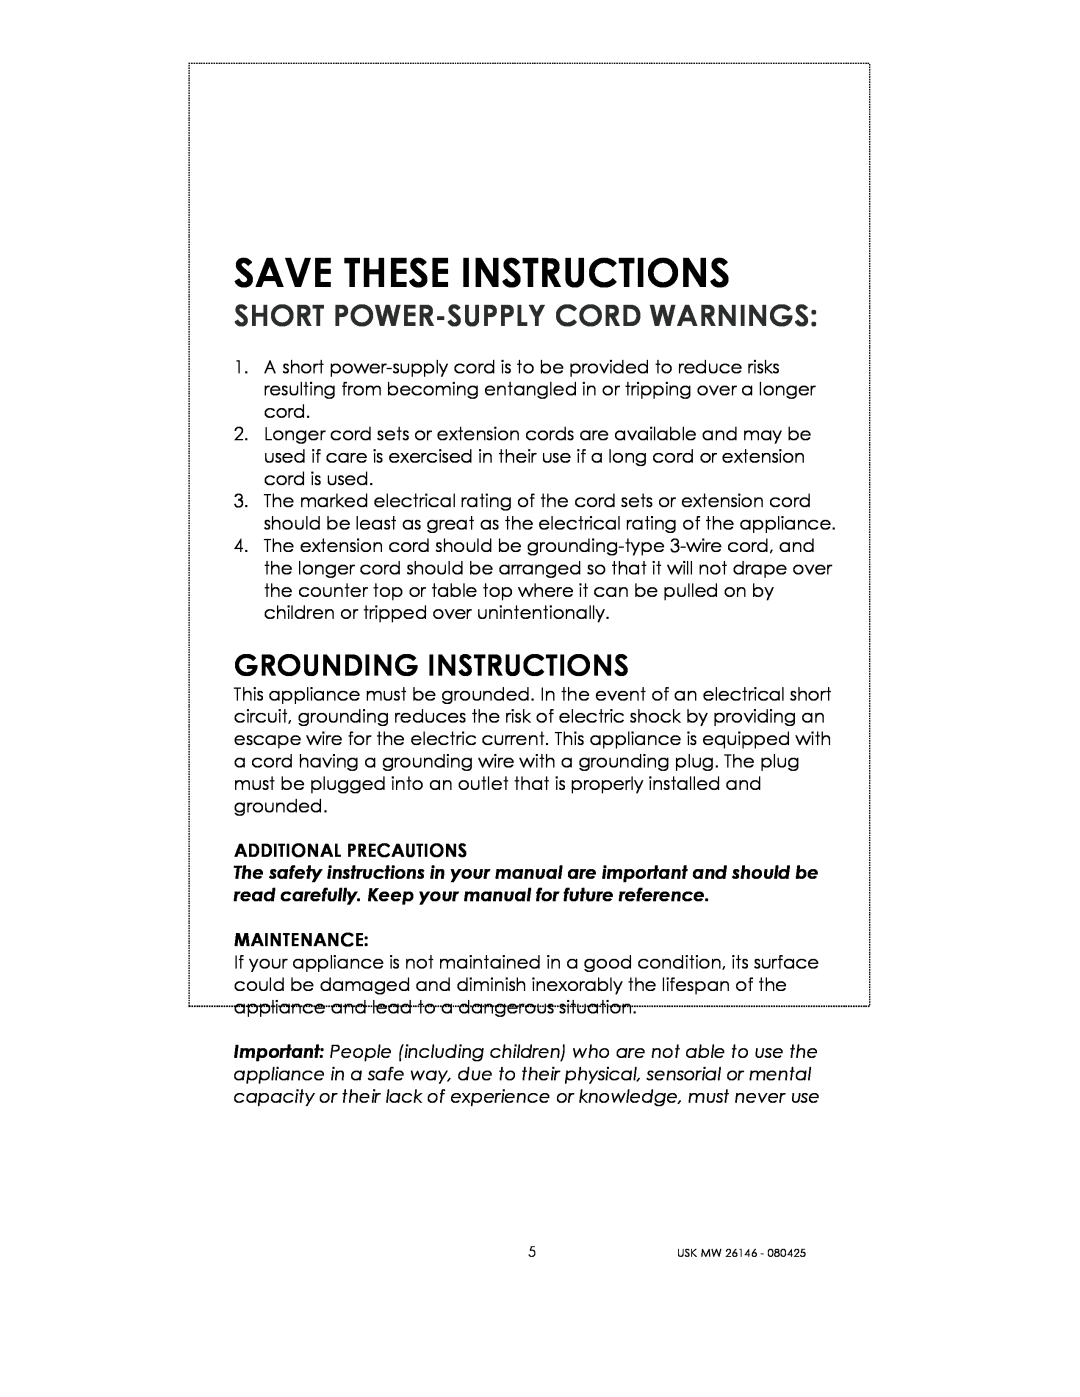 Kalorik USK MW 26146 manual Save These Instructions, Grounding Instructions, Short Power-Supply Cord Warnings 